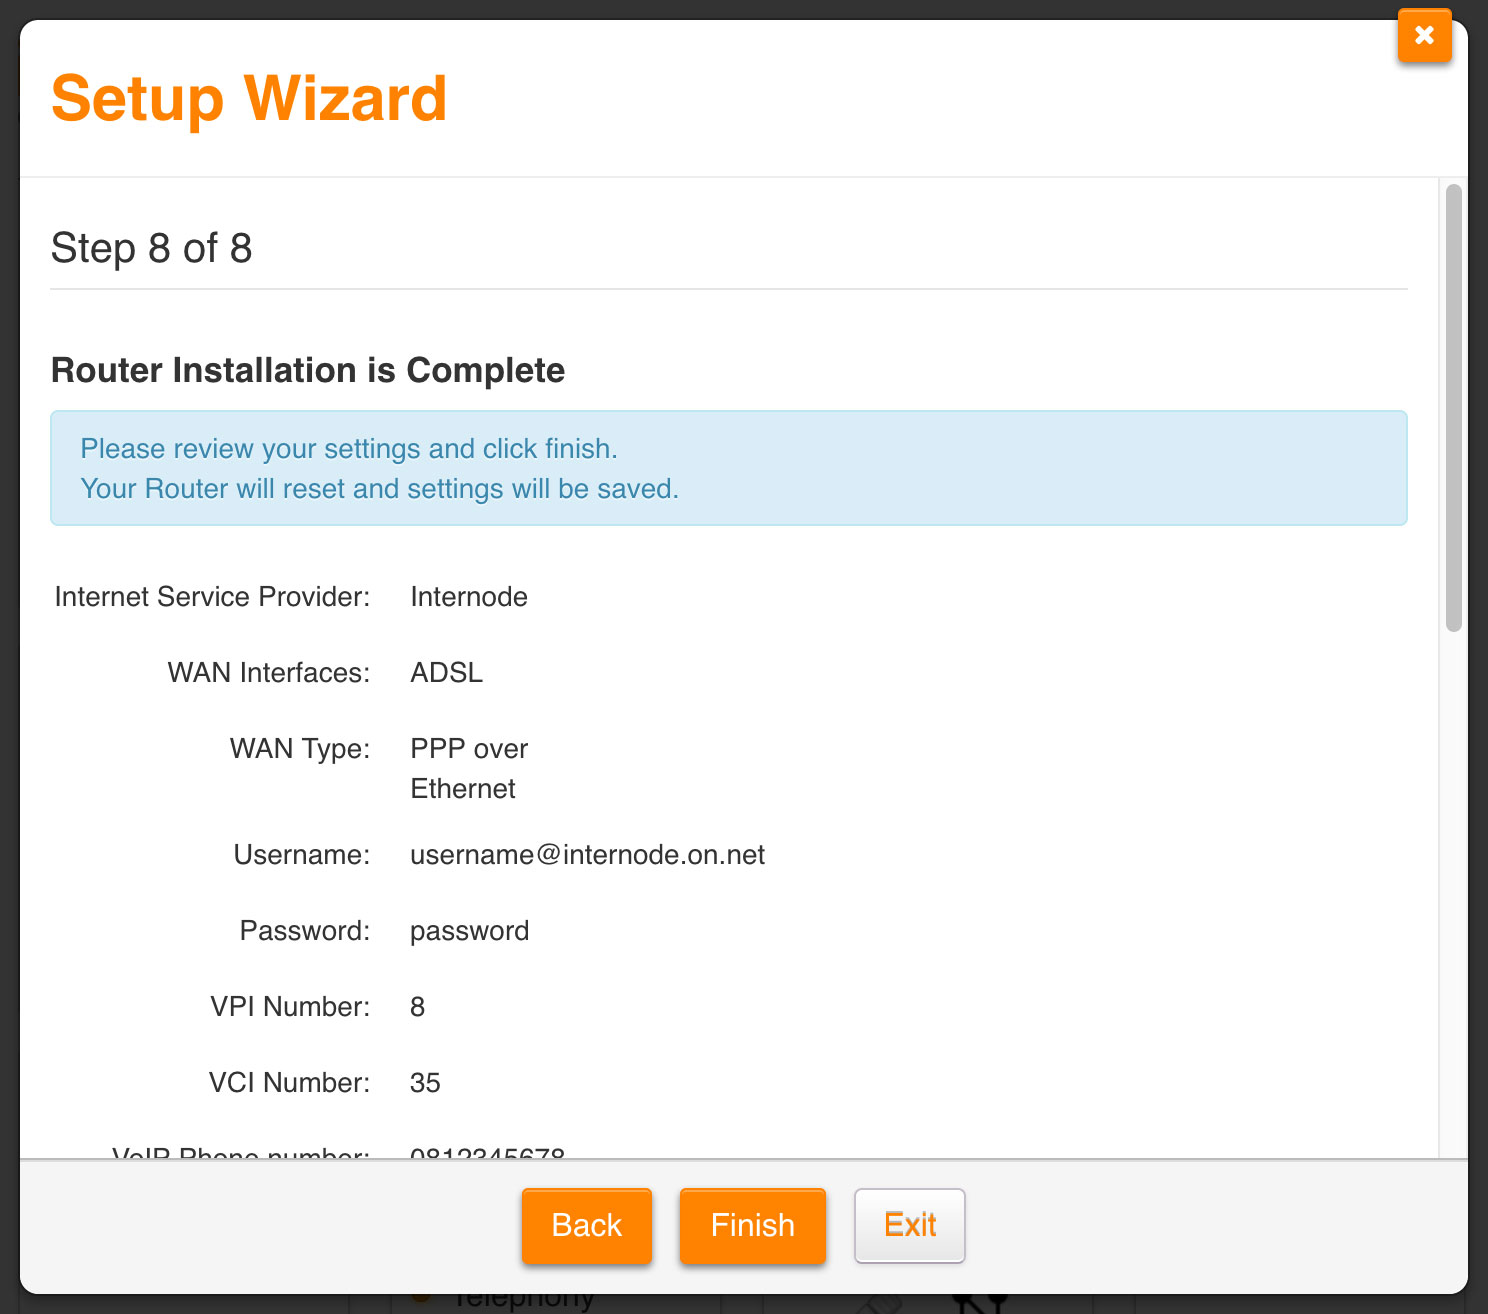 Screenshot: Reviewing settings and finishing the wizard